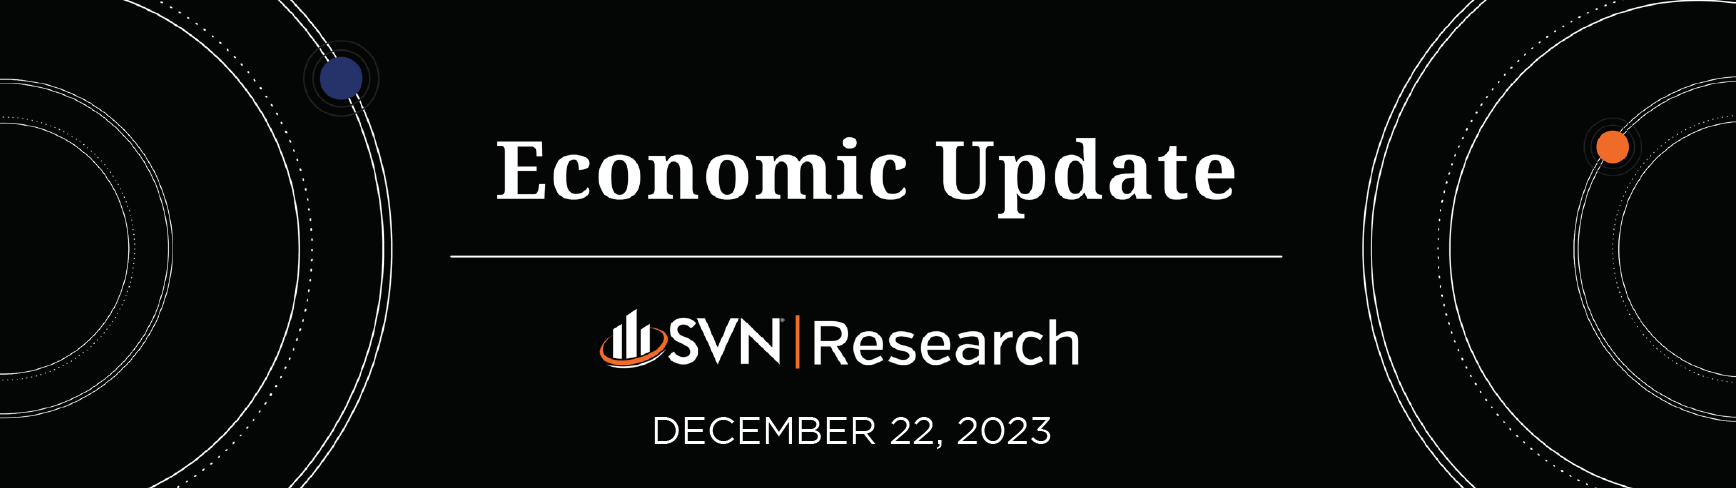 SVN | Research Economic Update 12.22.2023